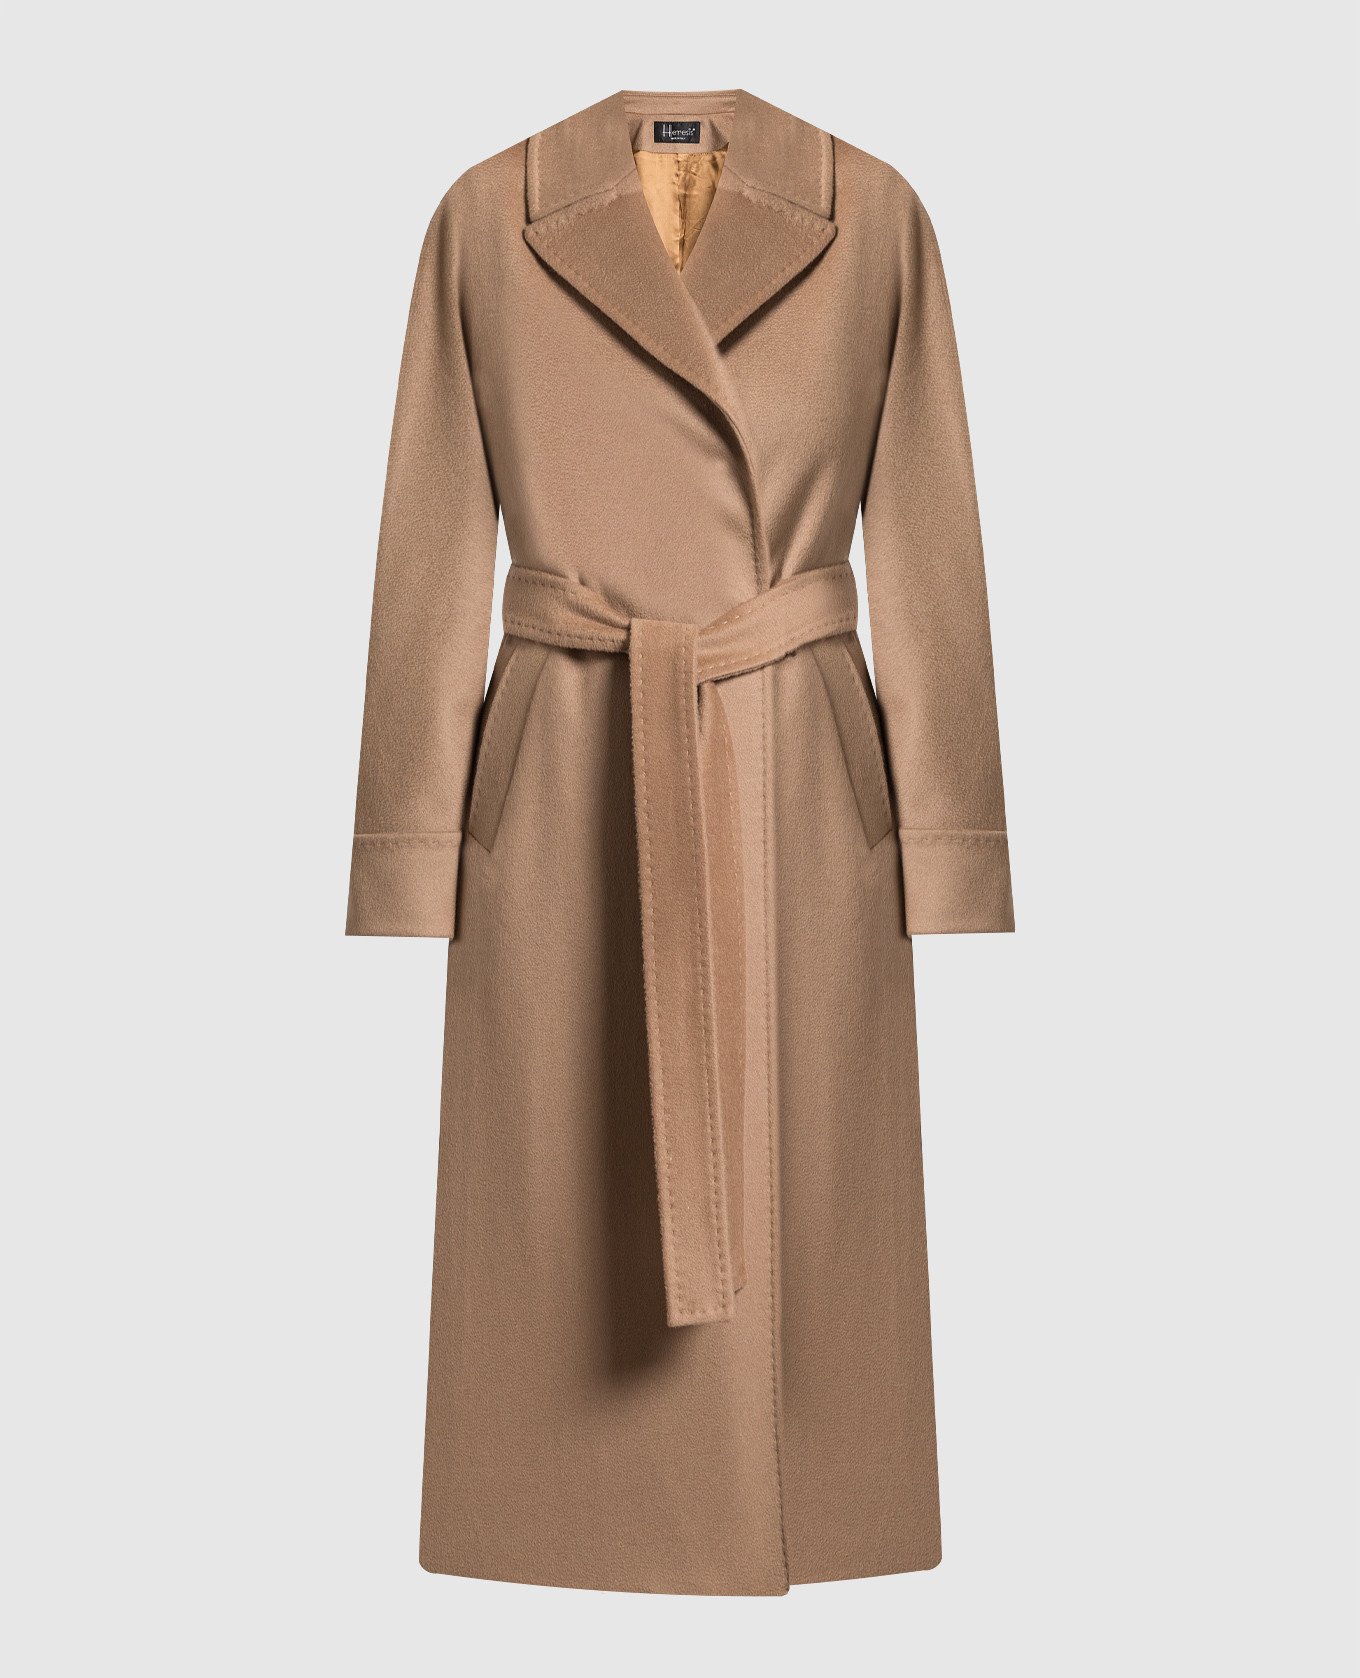 Brown coat made of wool